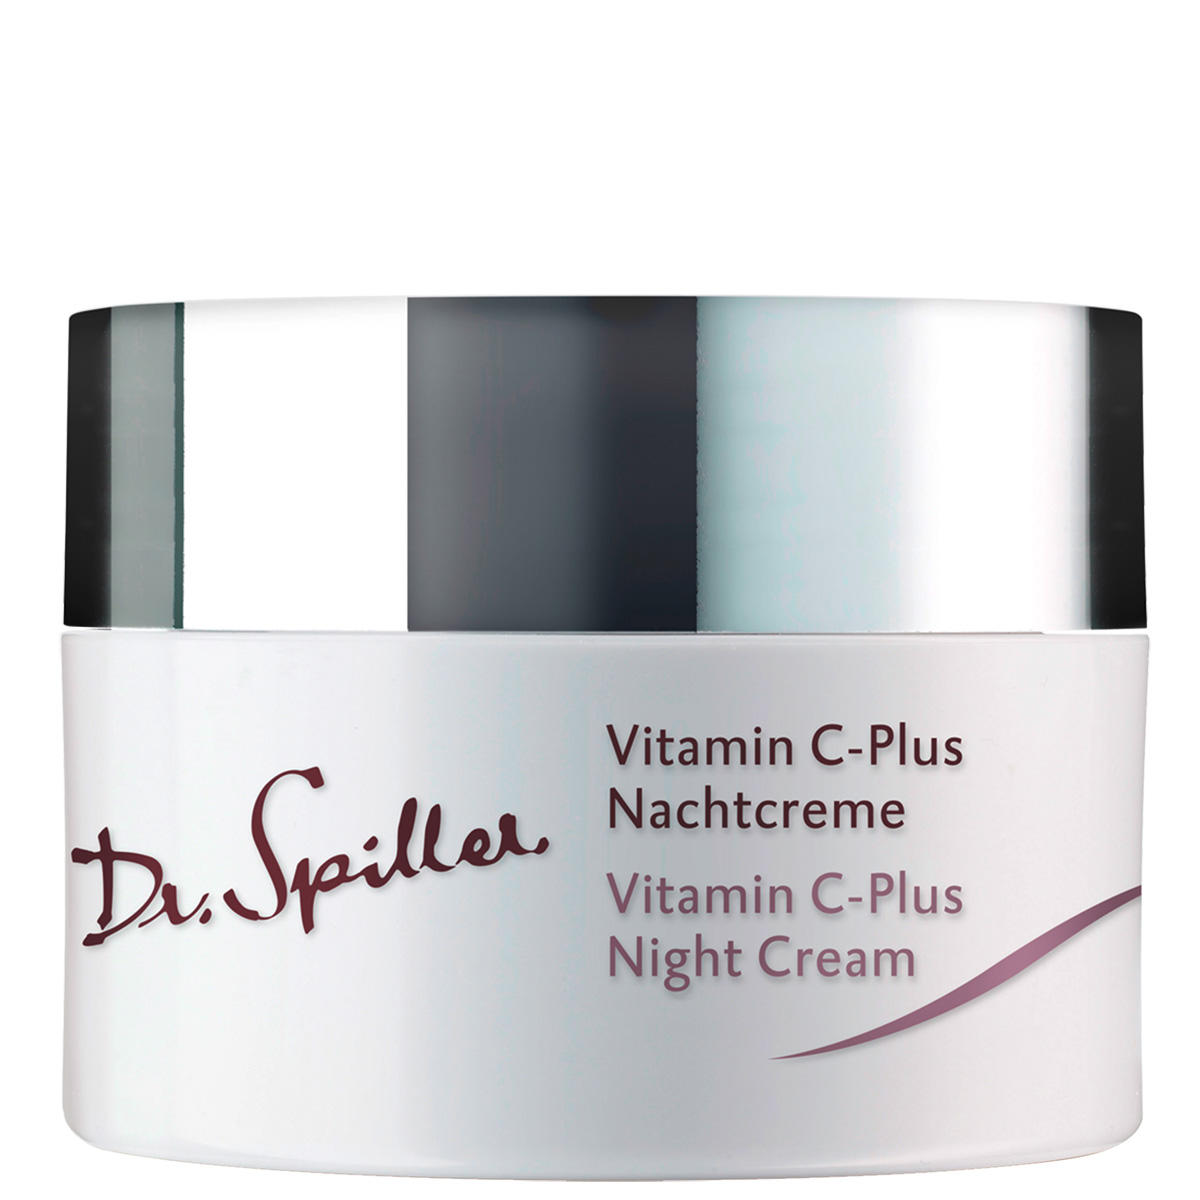 Dr. Spiller Biomimetic SkinCare Vitamin C-Plus Nachtcreme 50 ml - 1